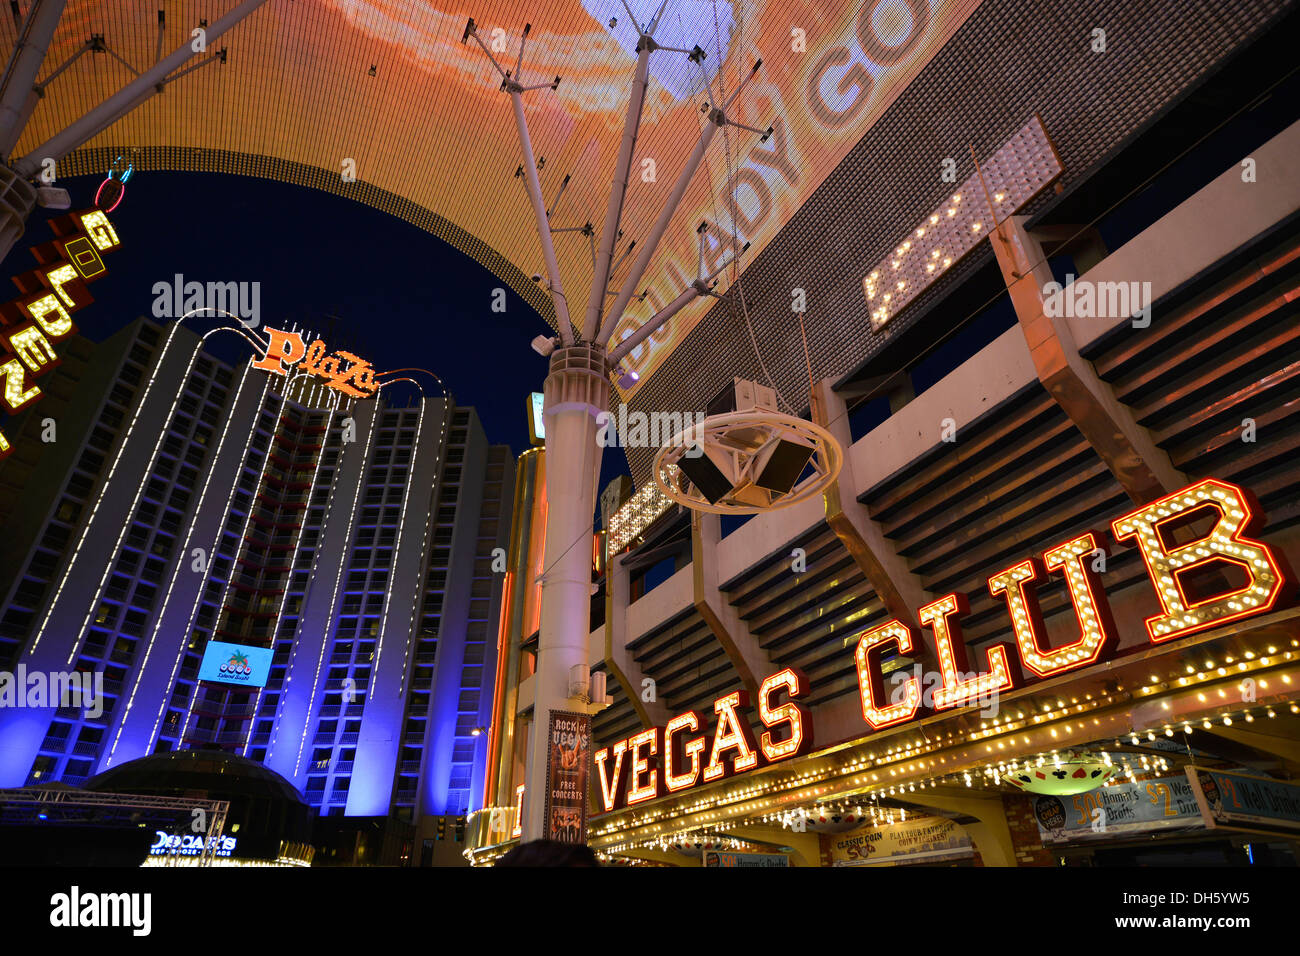 Plaza Casino Hotel, Vegas Club Casino, Fremont Street Experience in old Las Vegas, Downtown Las Vegas, Nevada Stock Photo